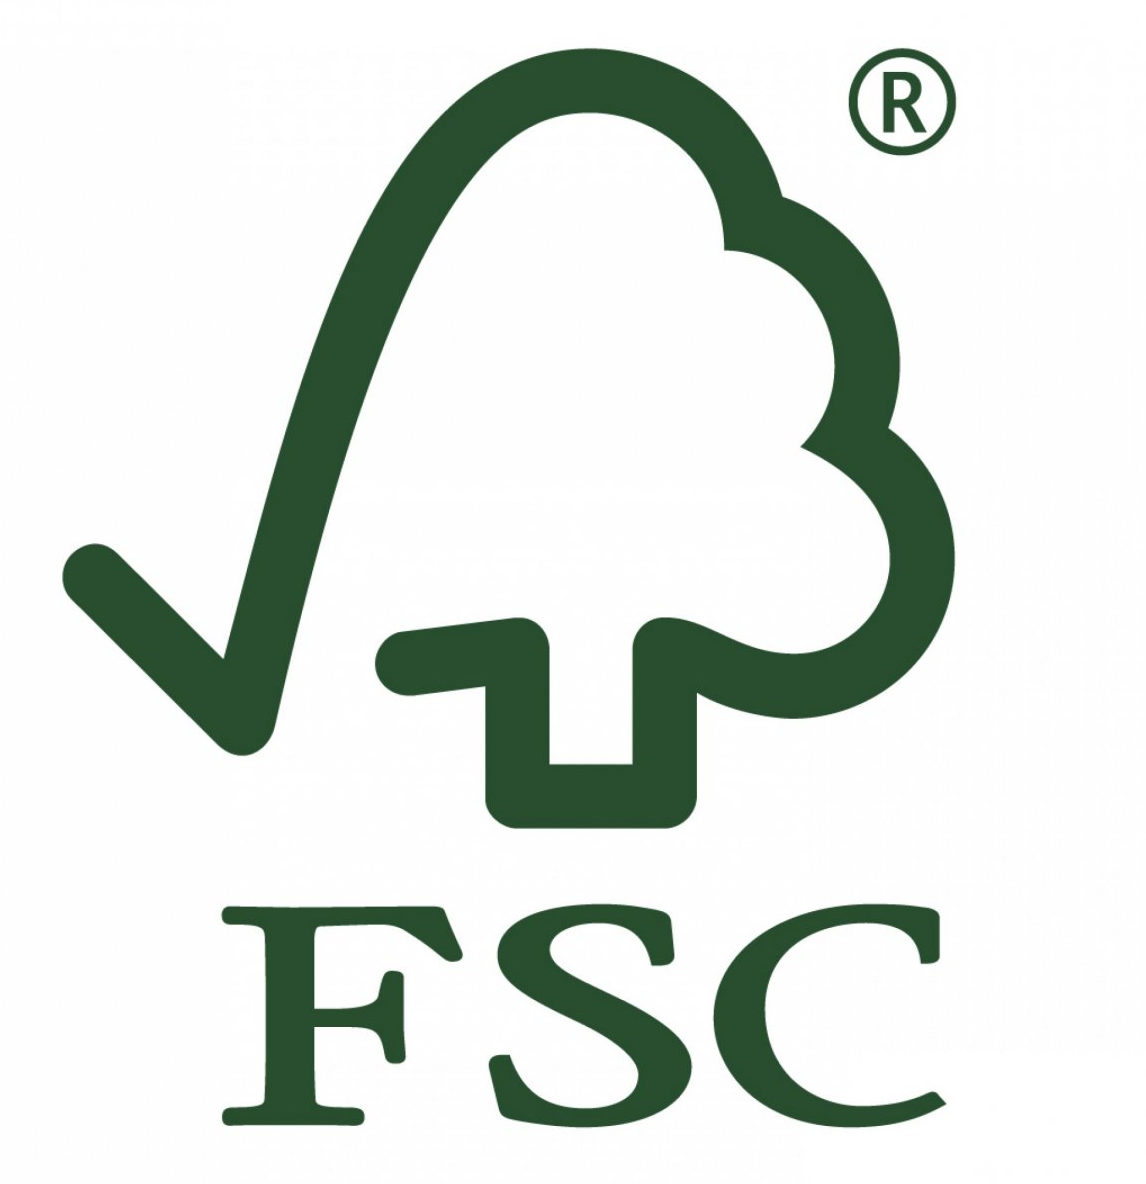 Forest Stewardship Council Logo Image